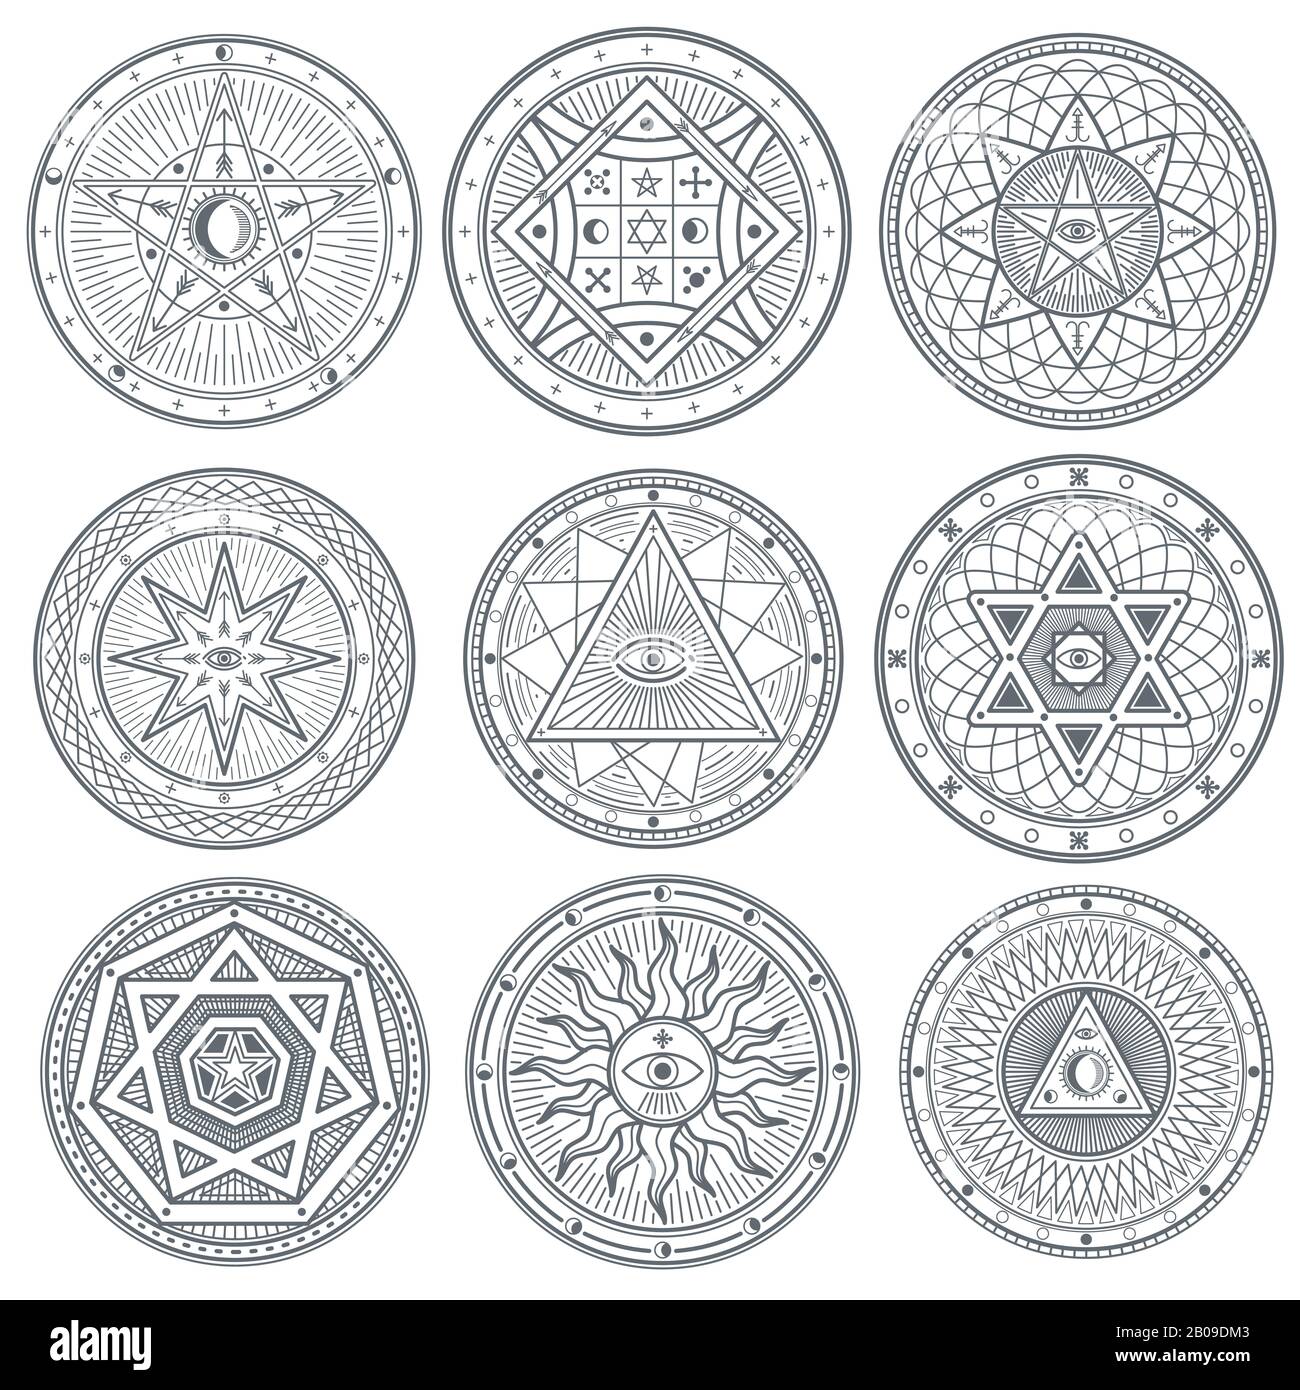 Occult, mystic, spiritual, esoteric vector symbols. Spiritual masonic tattoo symbol, illustration of spiritual religion signs Stock Vector